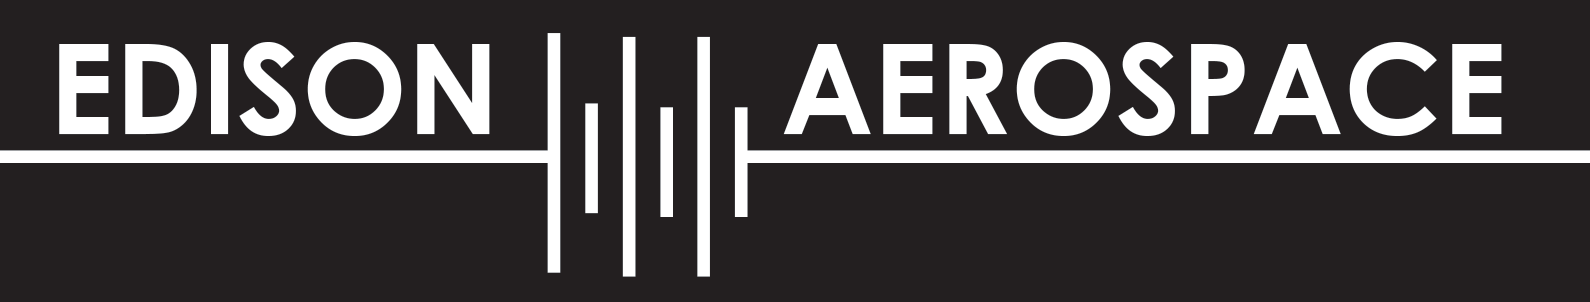 Edison Aerospace logo